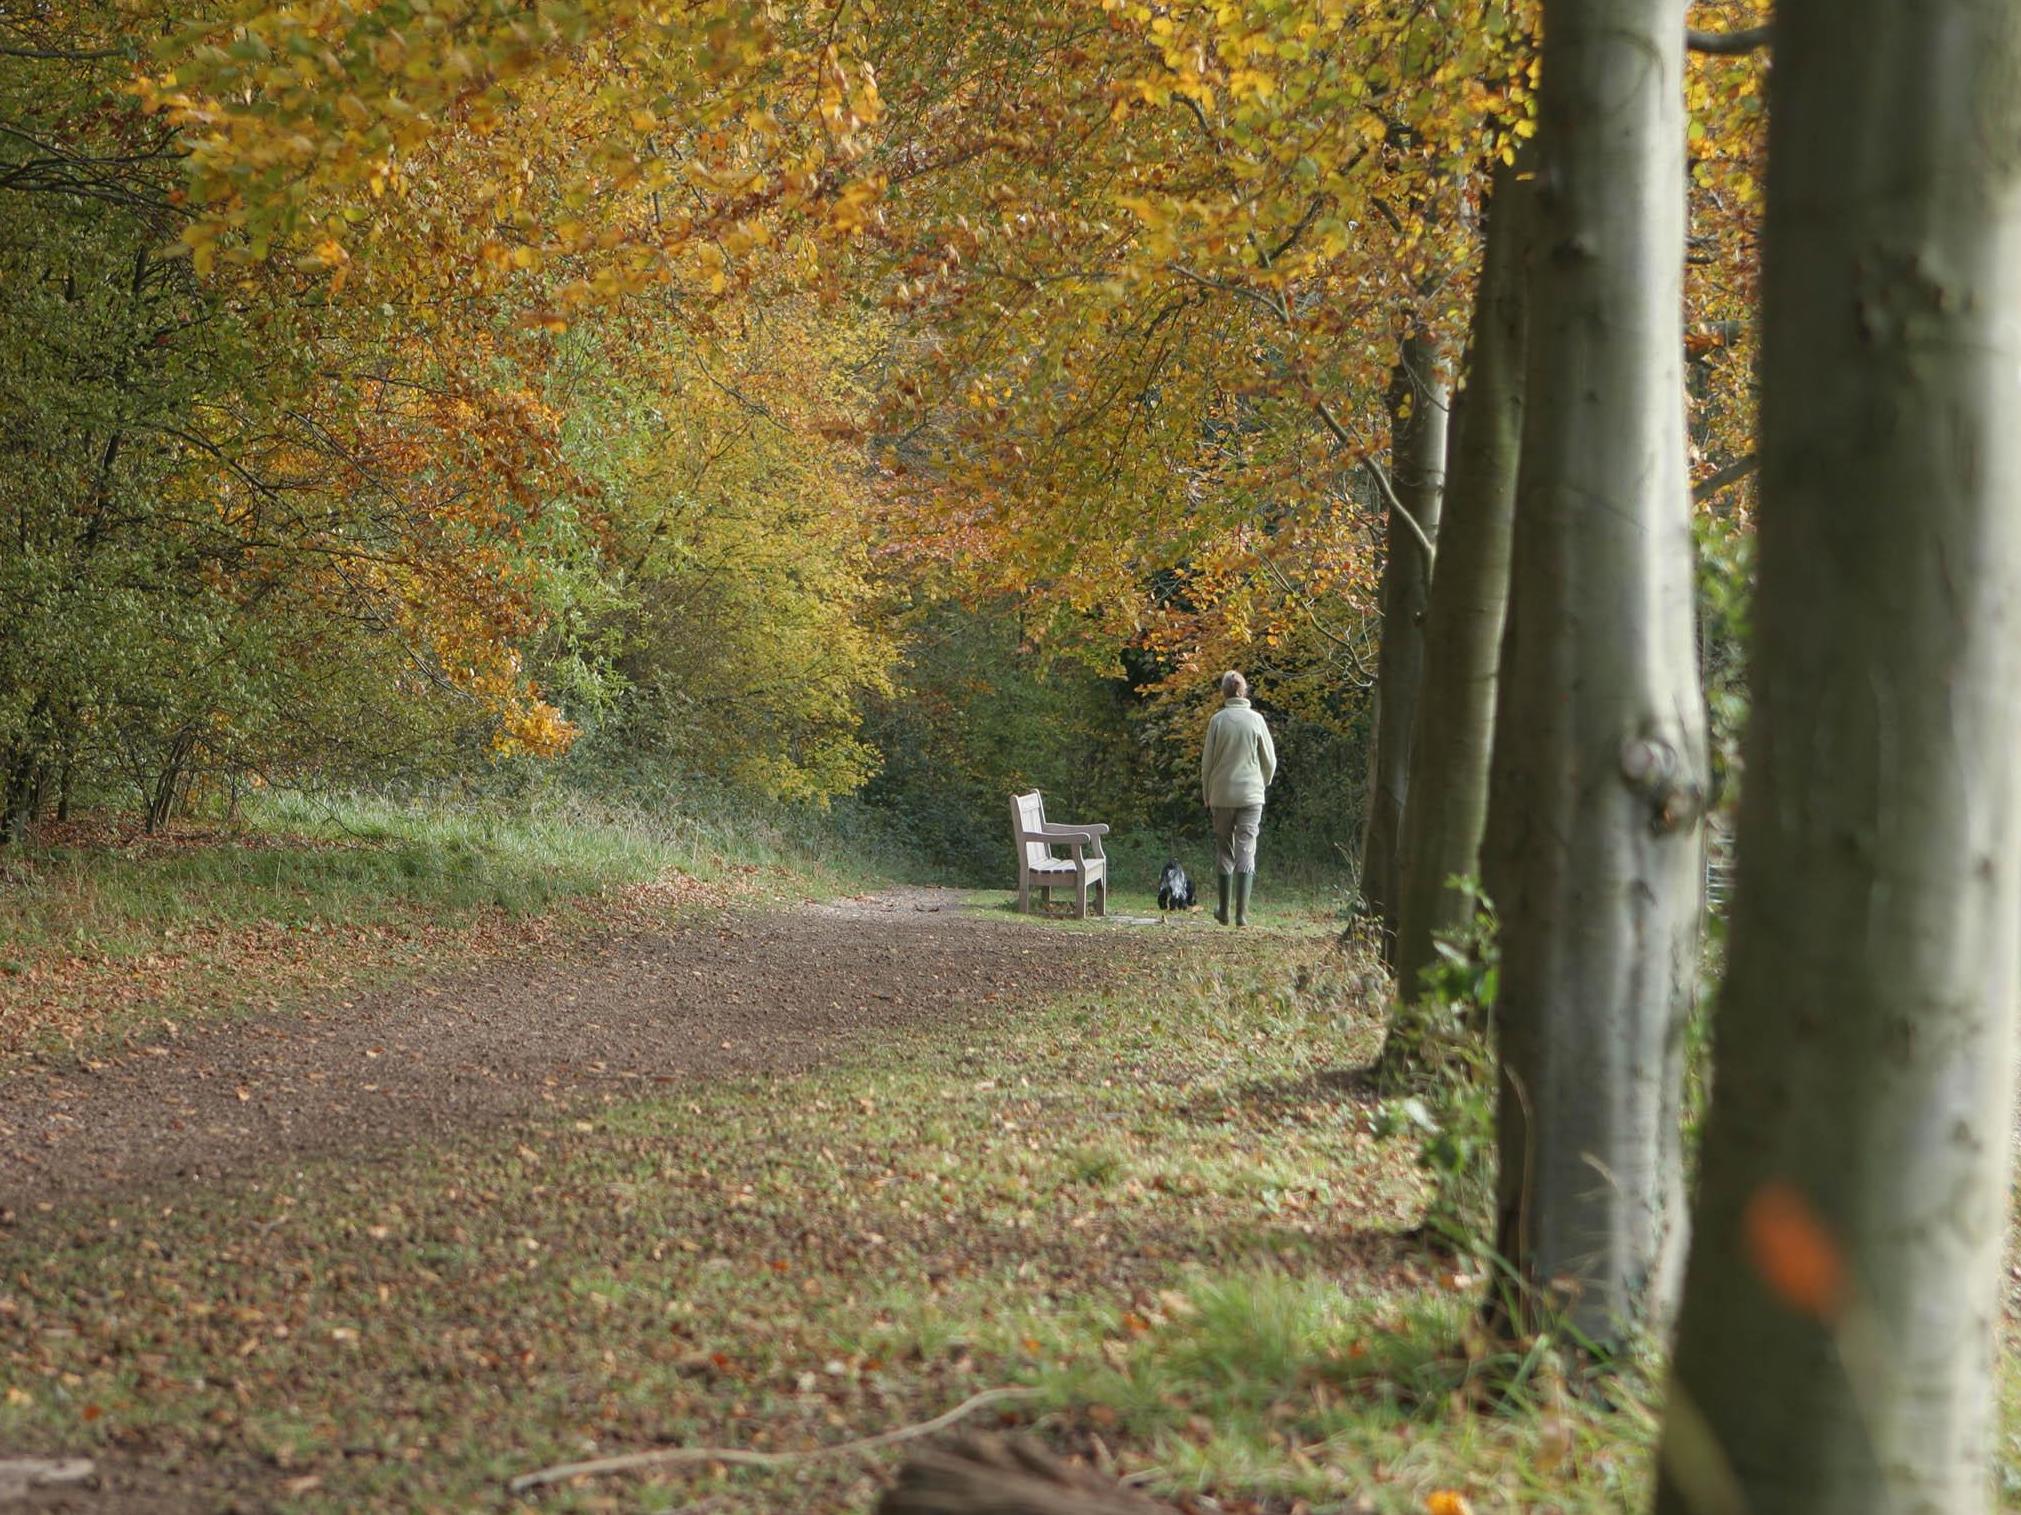 Wandlebury Country Park in Cambridge, where Will Gore had his internship